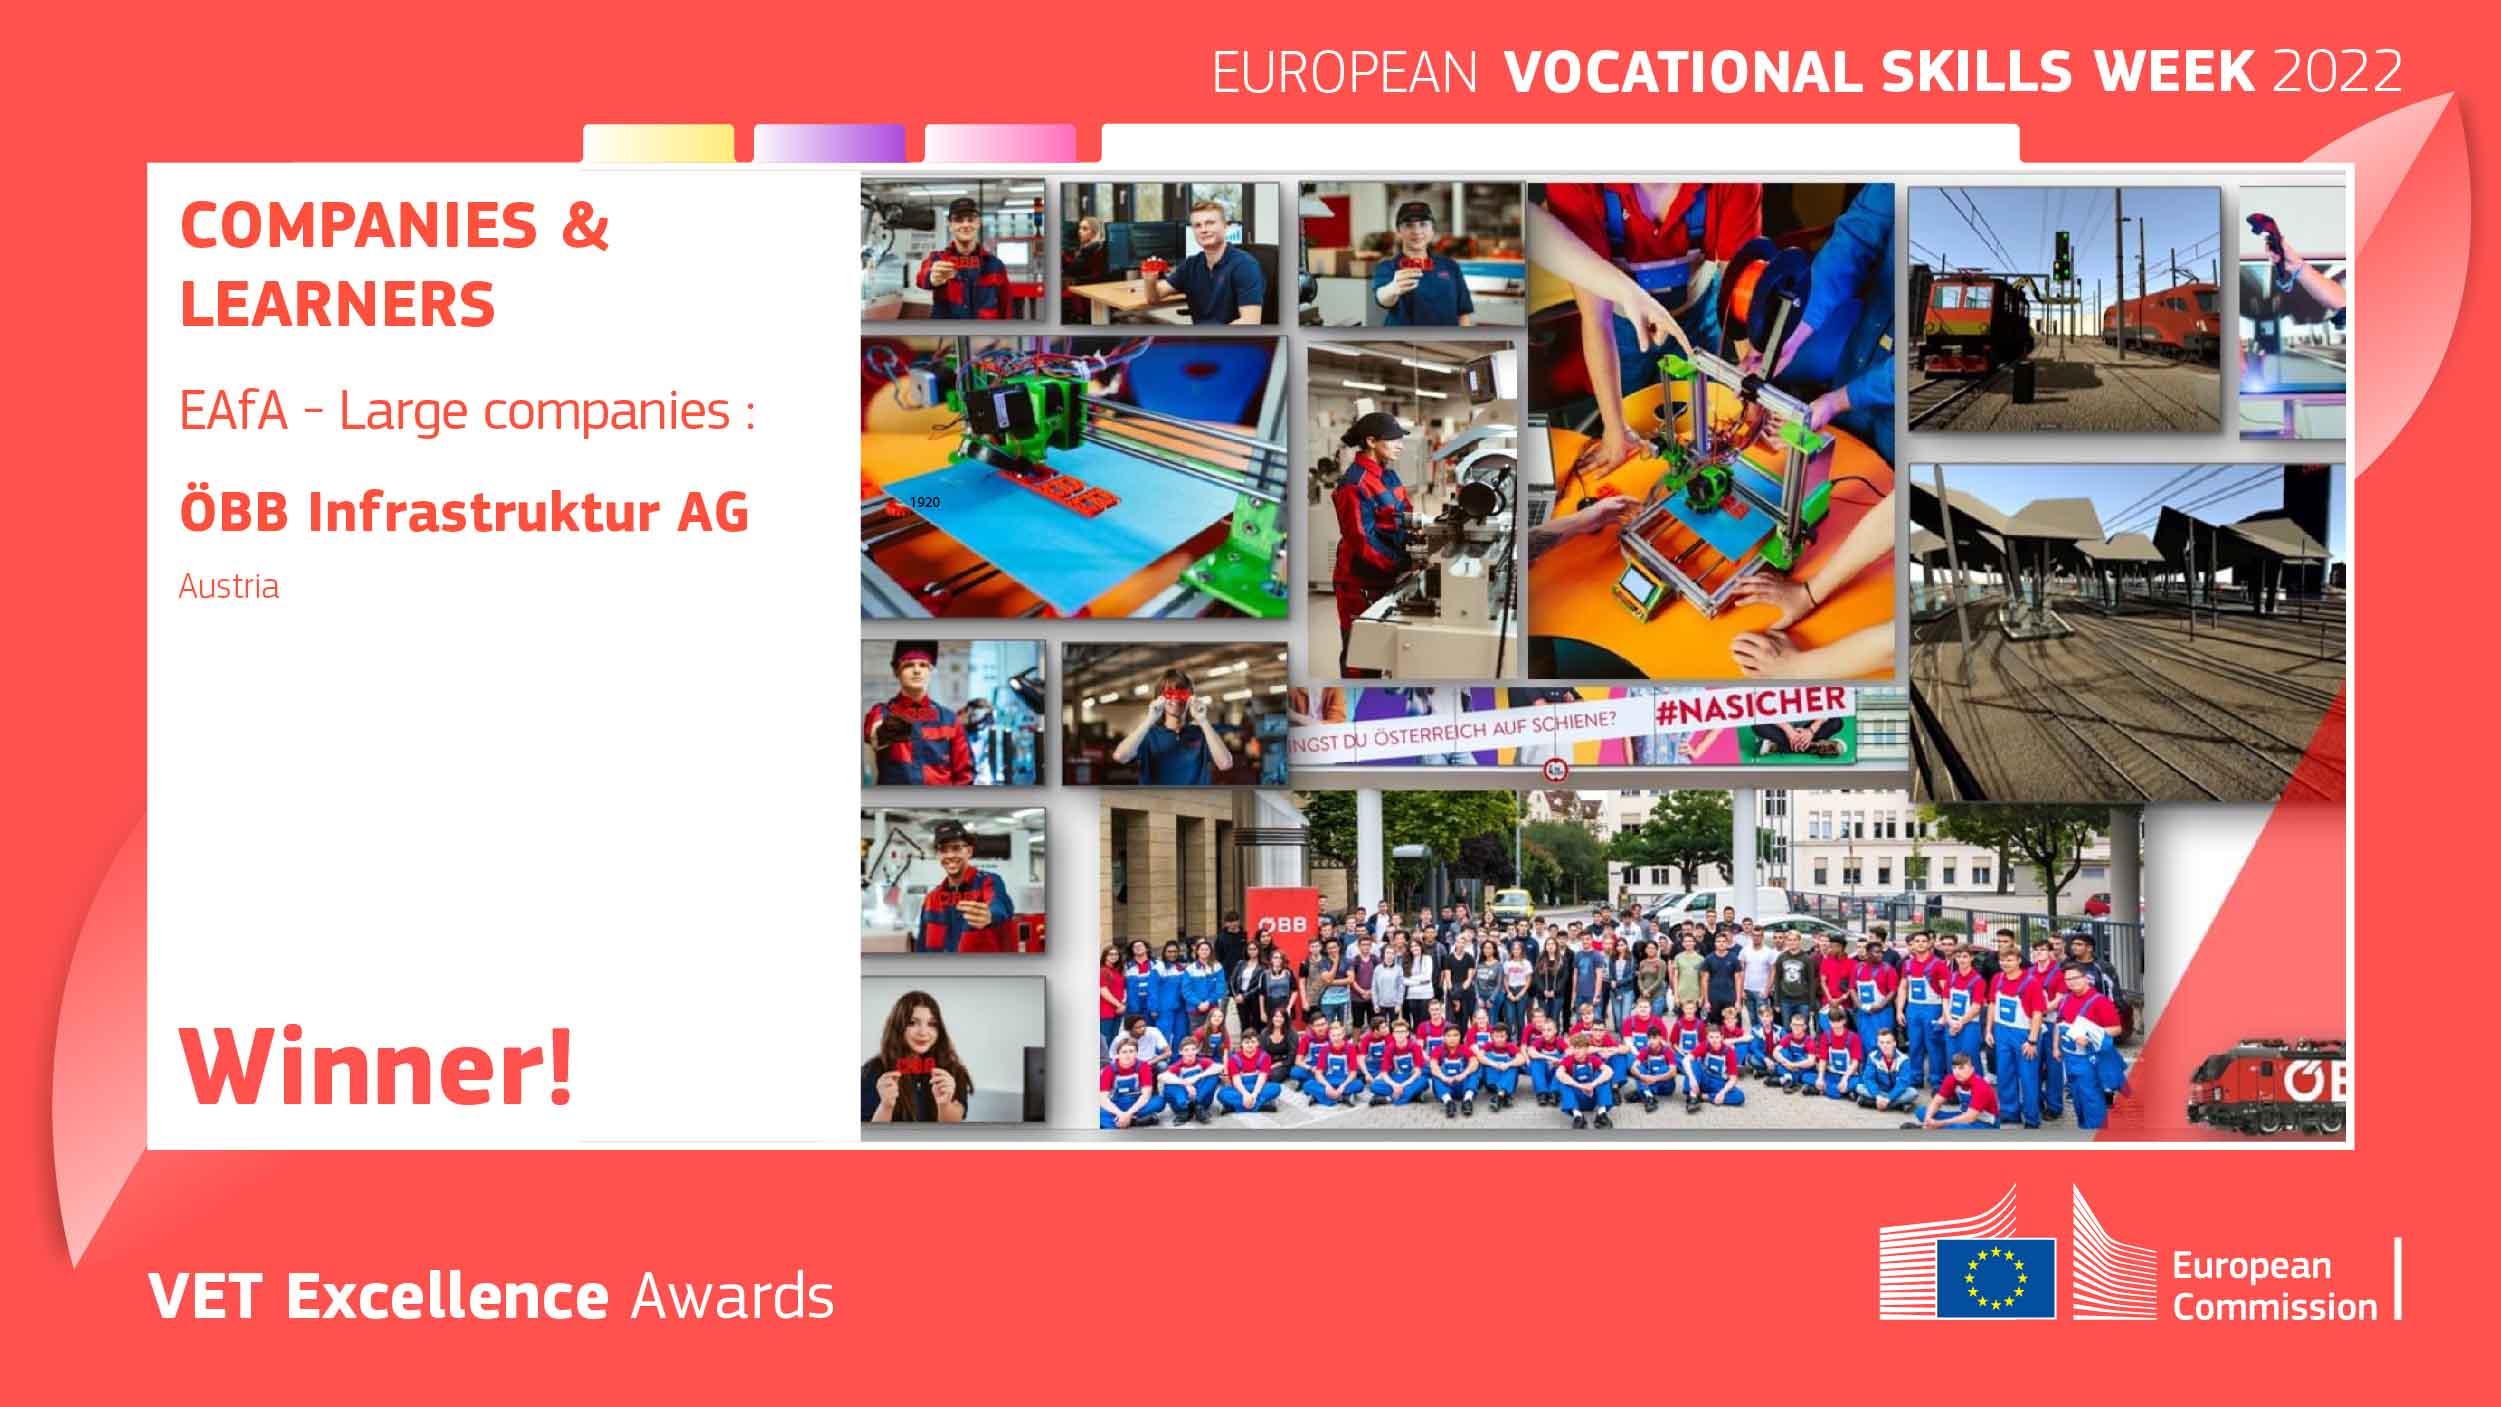 European Vocational Skills Week 2022<br/>Companies & Learners<br/>EAfA - Large companies: ÖBB Infrastruktur AG, Austria<br/>Winner!<br/>Vet Excellence Awards<br/>European Commission